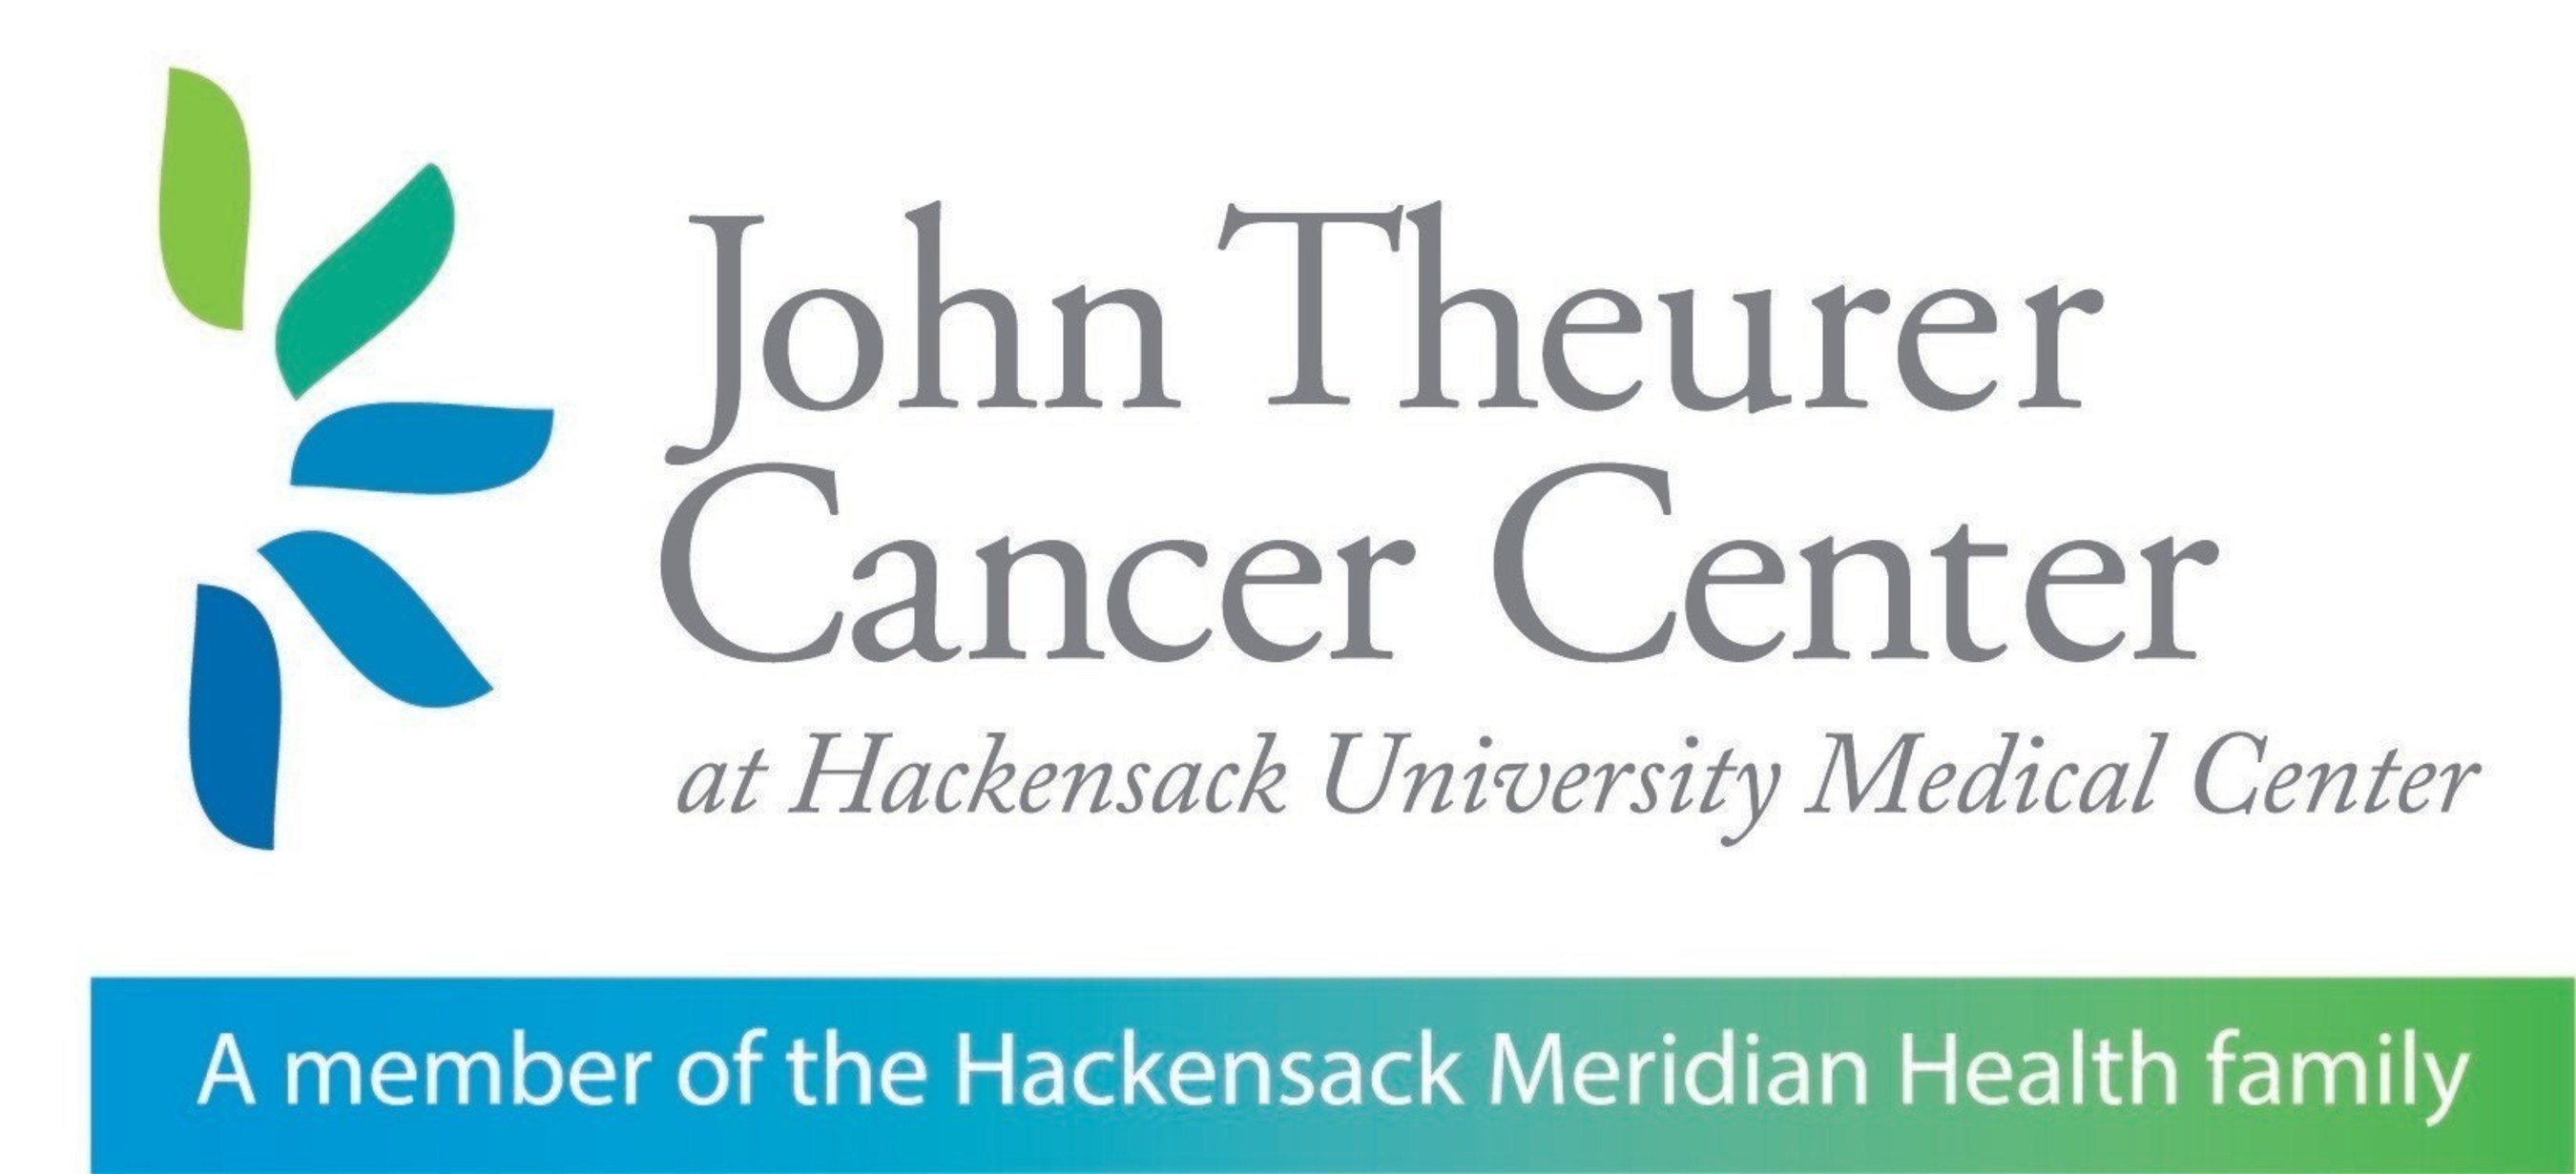 John Theurer Cancer Center at Hackensack University Medical Center